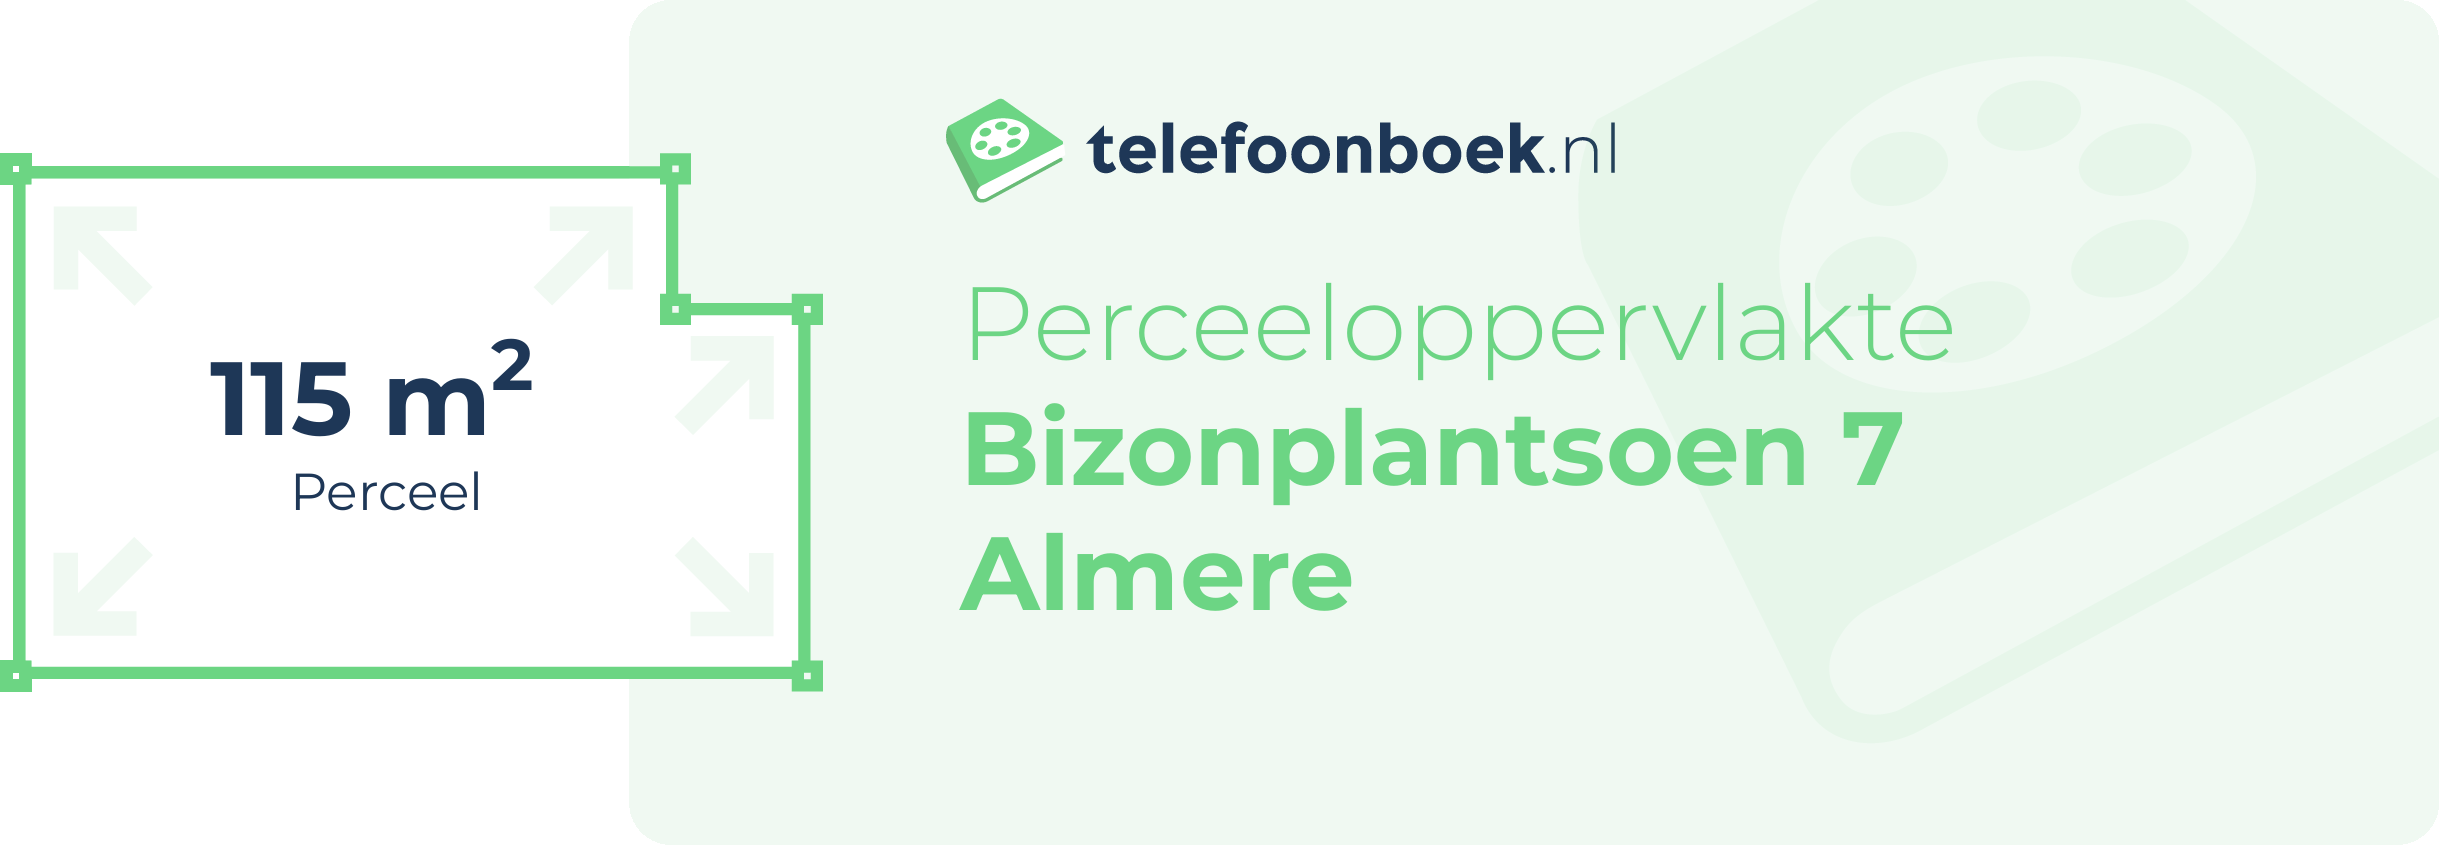 Perceeloppervlakte Bizonplantsoen 7 Almere